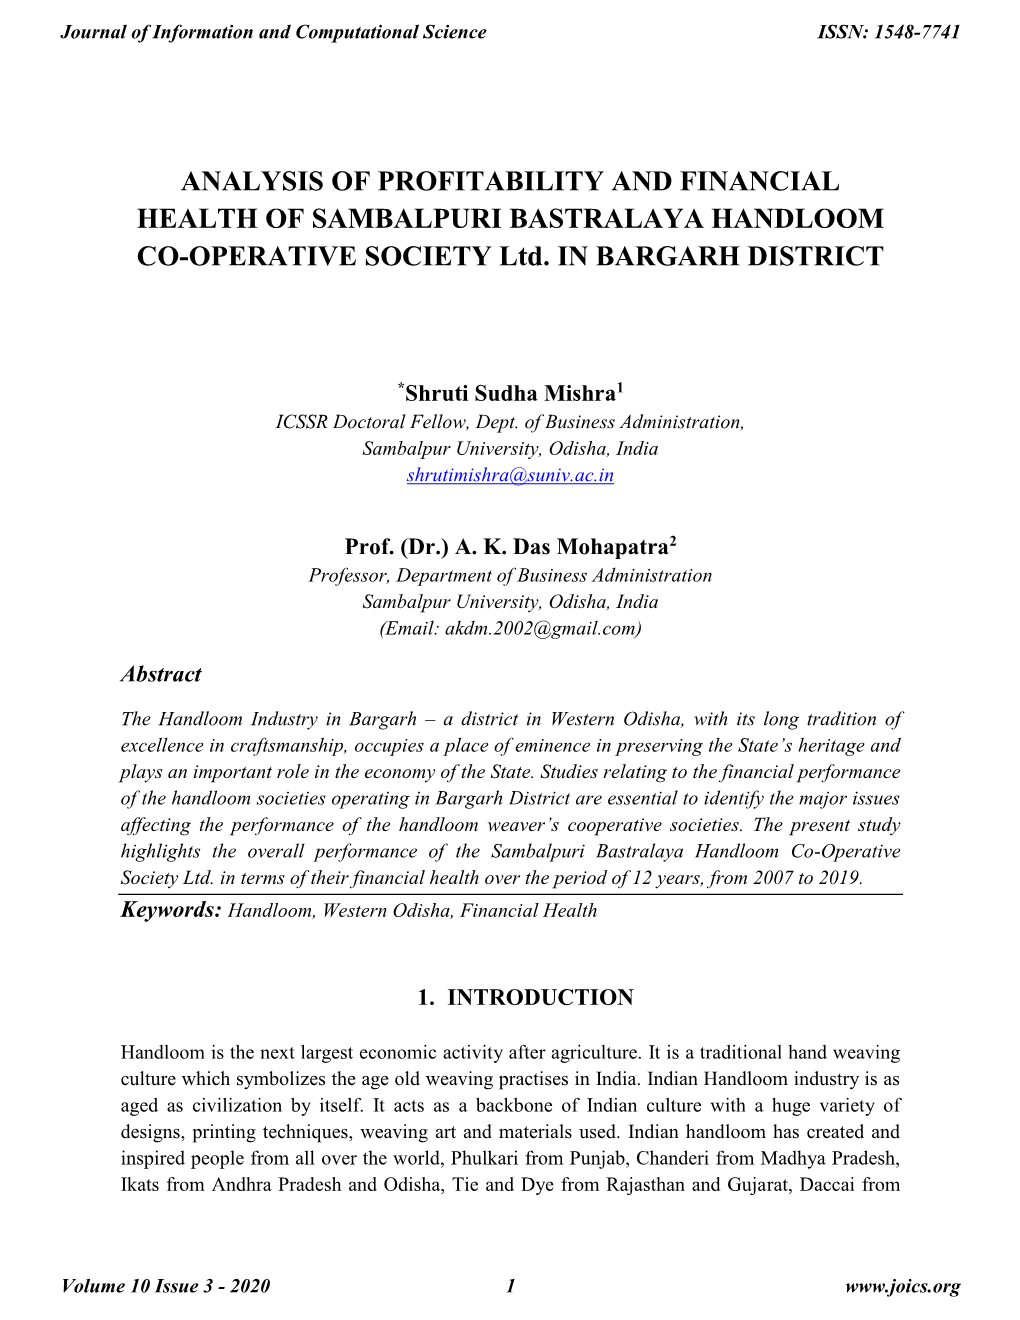 ANALYSIS of PROFITABILITY and FINANCIAL HEALTH of SAMBALPURI BASTRALAYA HANDLOOM CO-OPERATIVE SOCIETY Ltd. in BARGARH DISTRICT